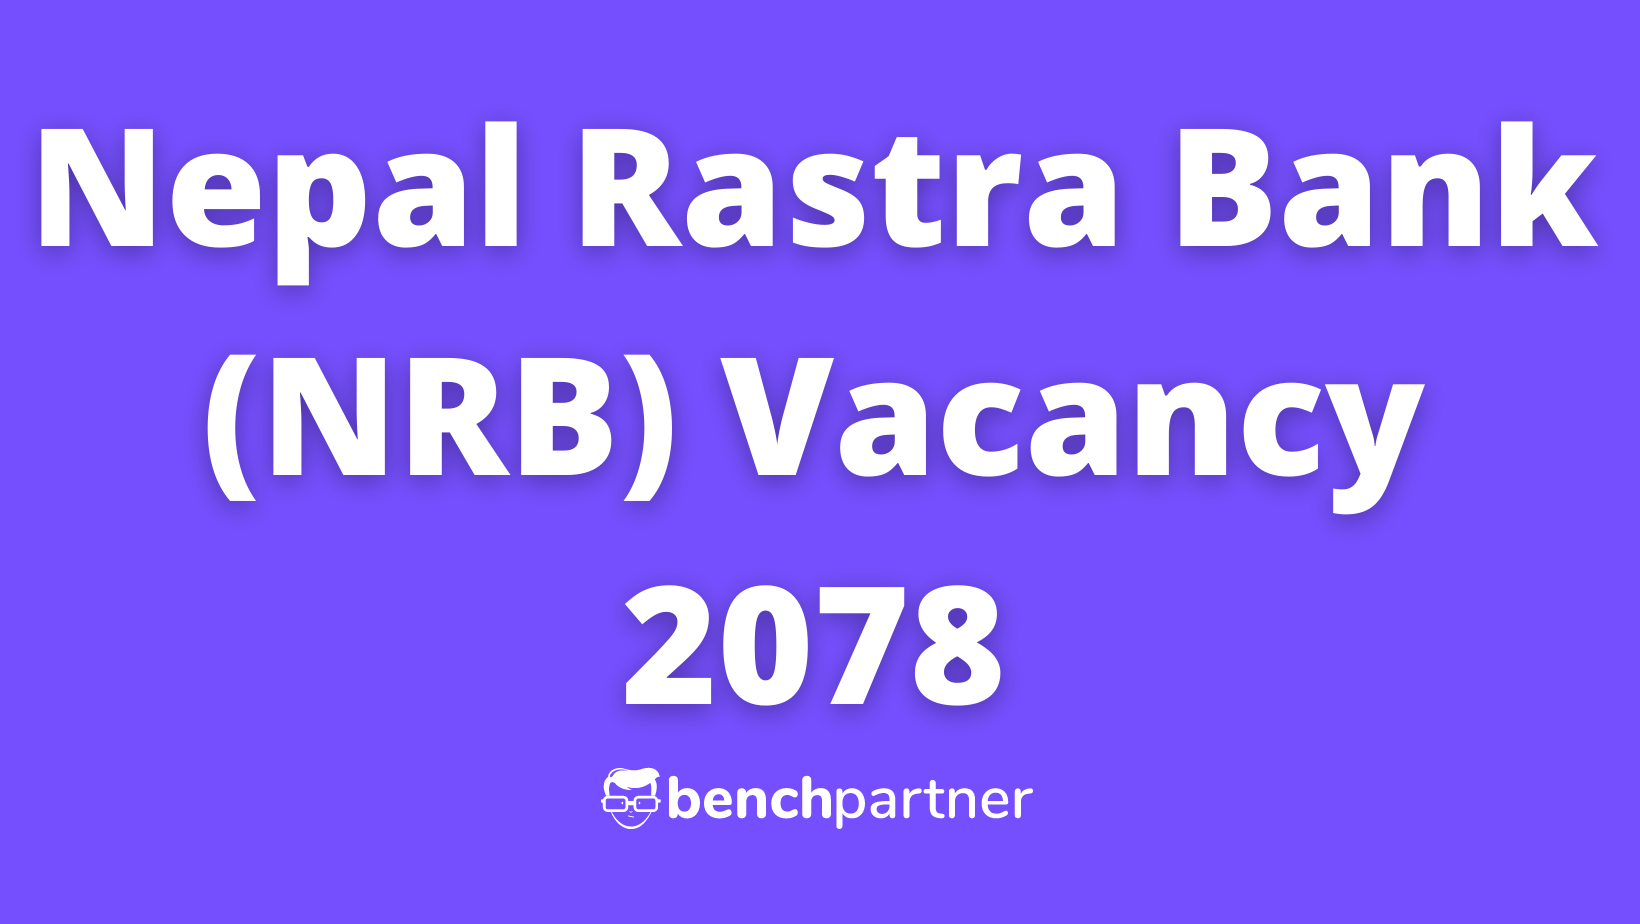 Nepal Rastra Bank (NRB) Vacancy 2078